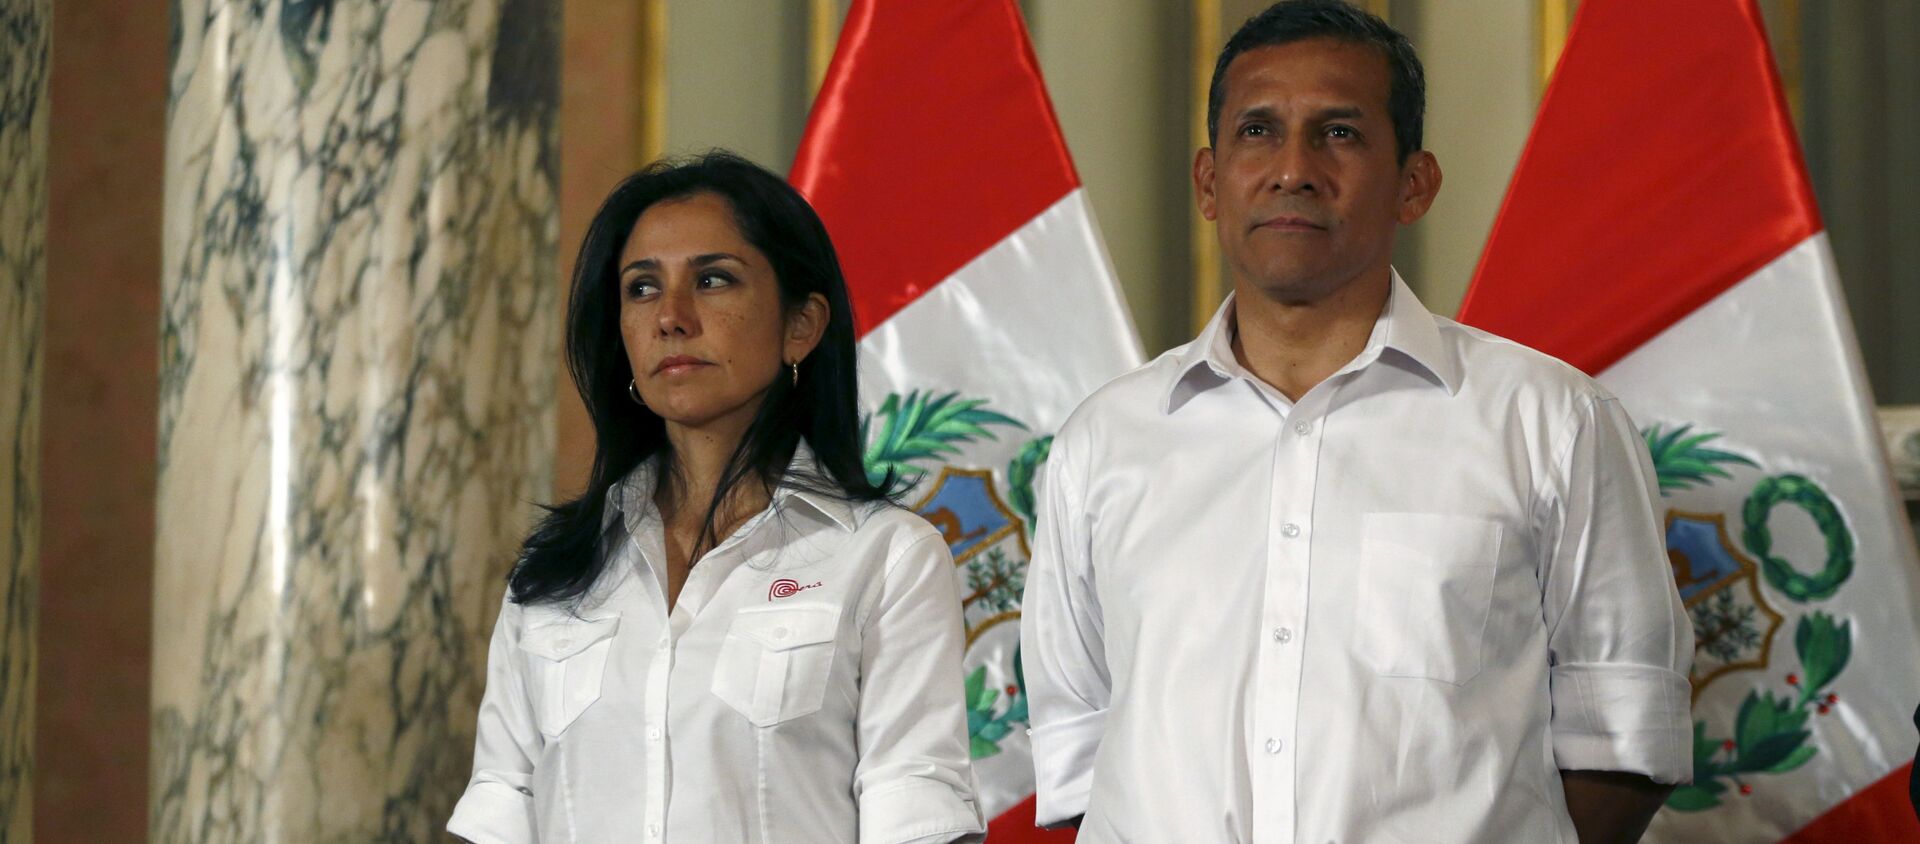 El expresidente de Perú, Ollanda Humala, junto a su mujer, Nadine Heredia - Sputnik Mundo, 1920, 18.09.2020